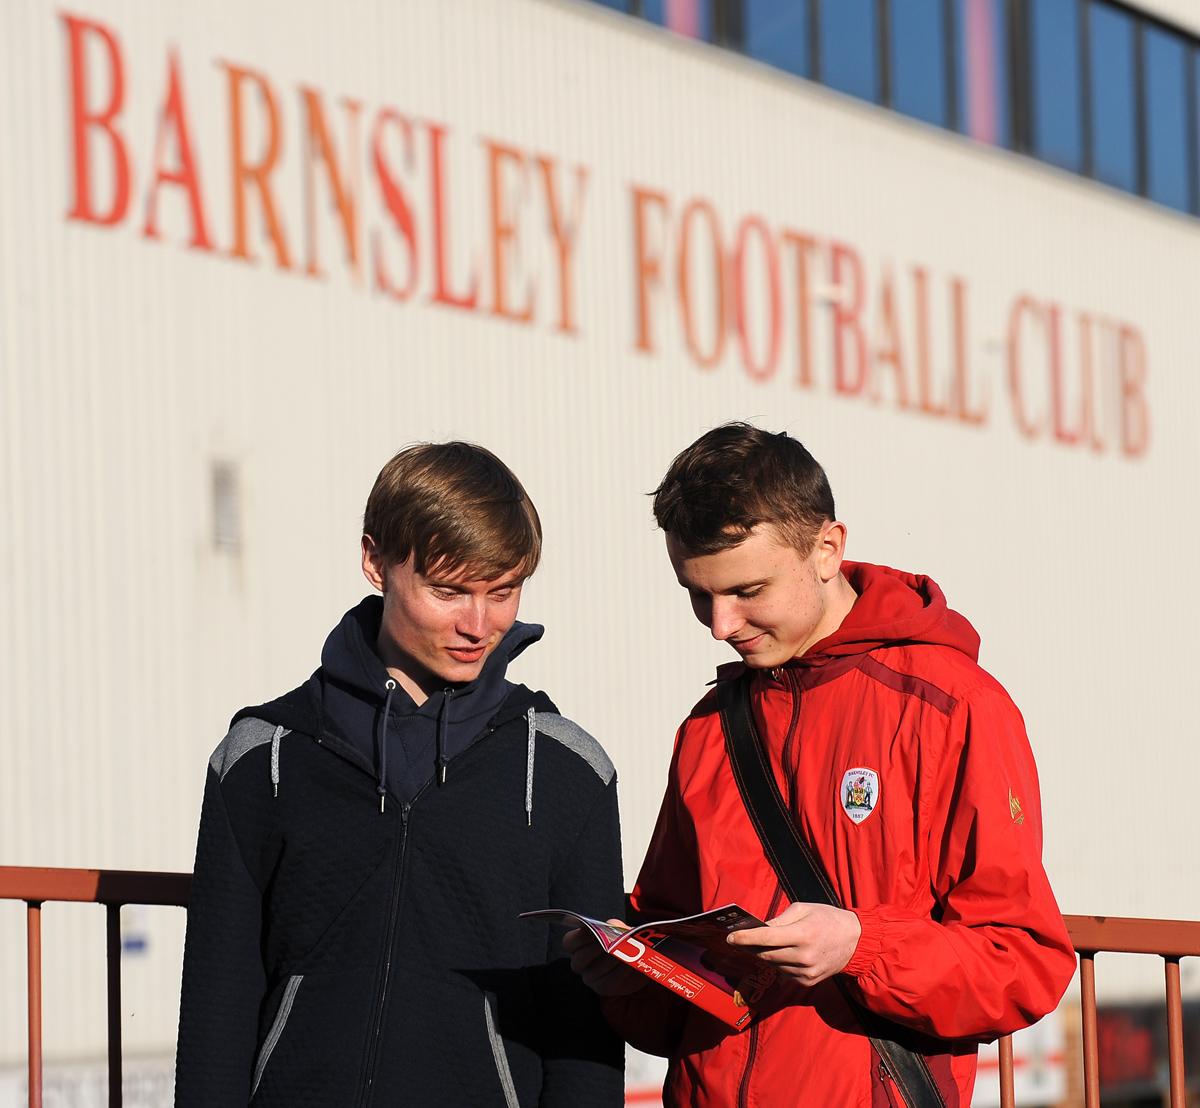 Burnley FC v Barnsley, Oakwell Stadium, South Yorkshire